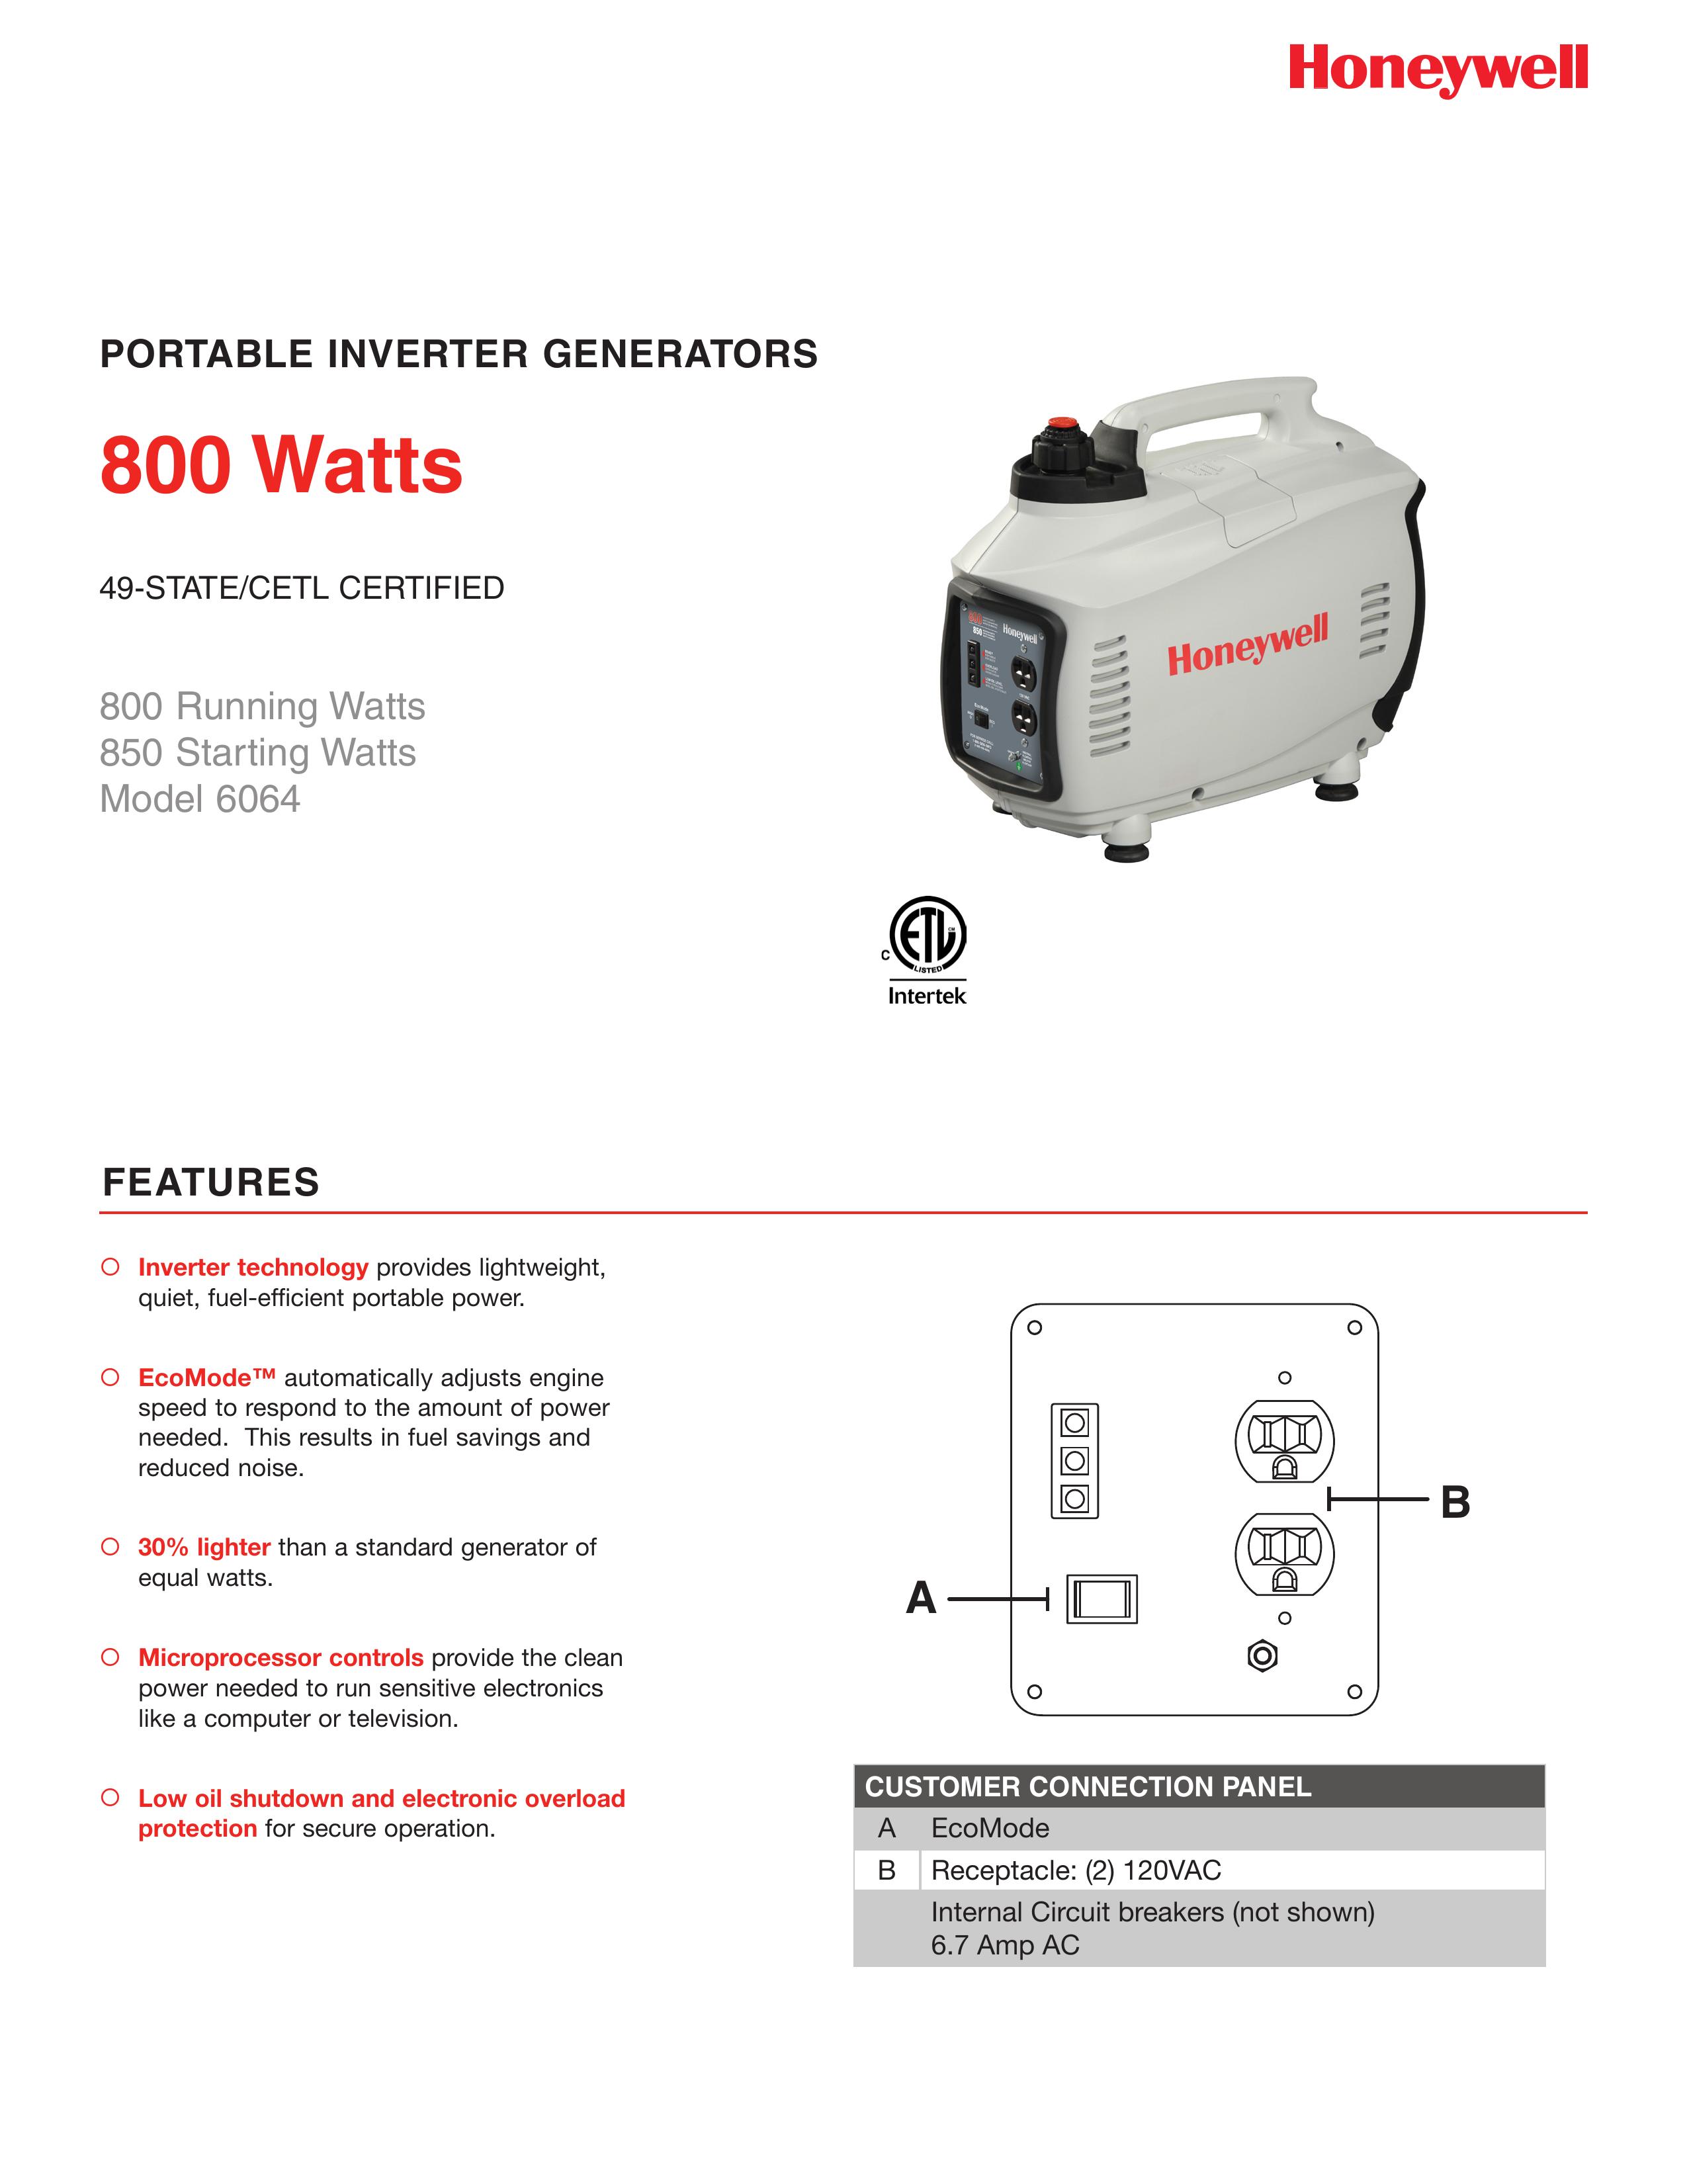 Honeywell 6064 Portable Generator User Manual